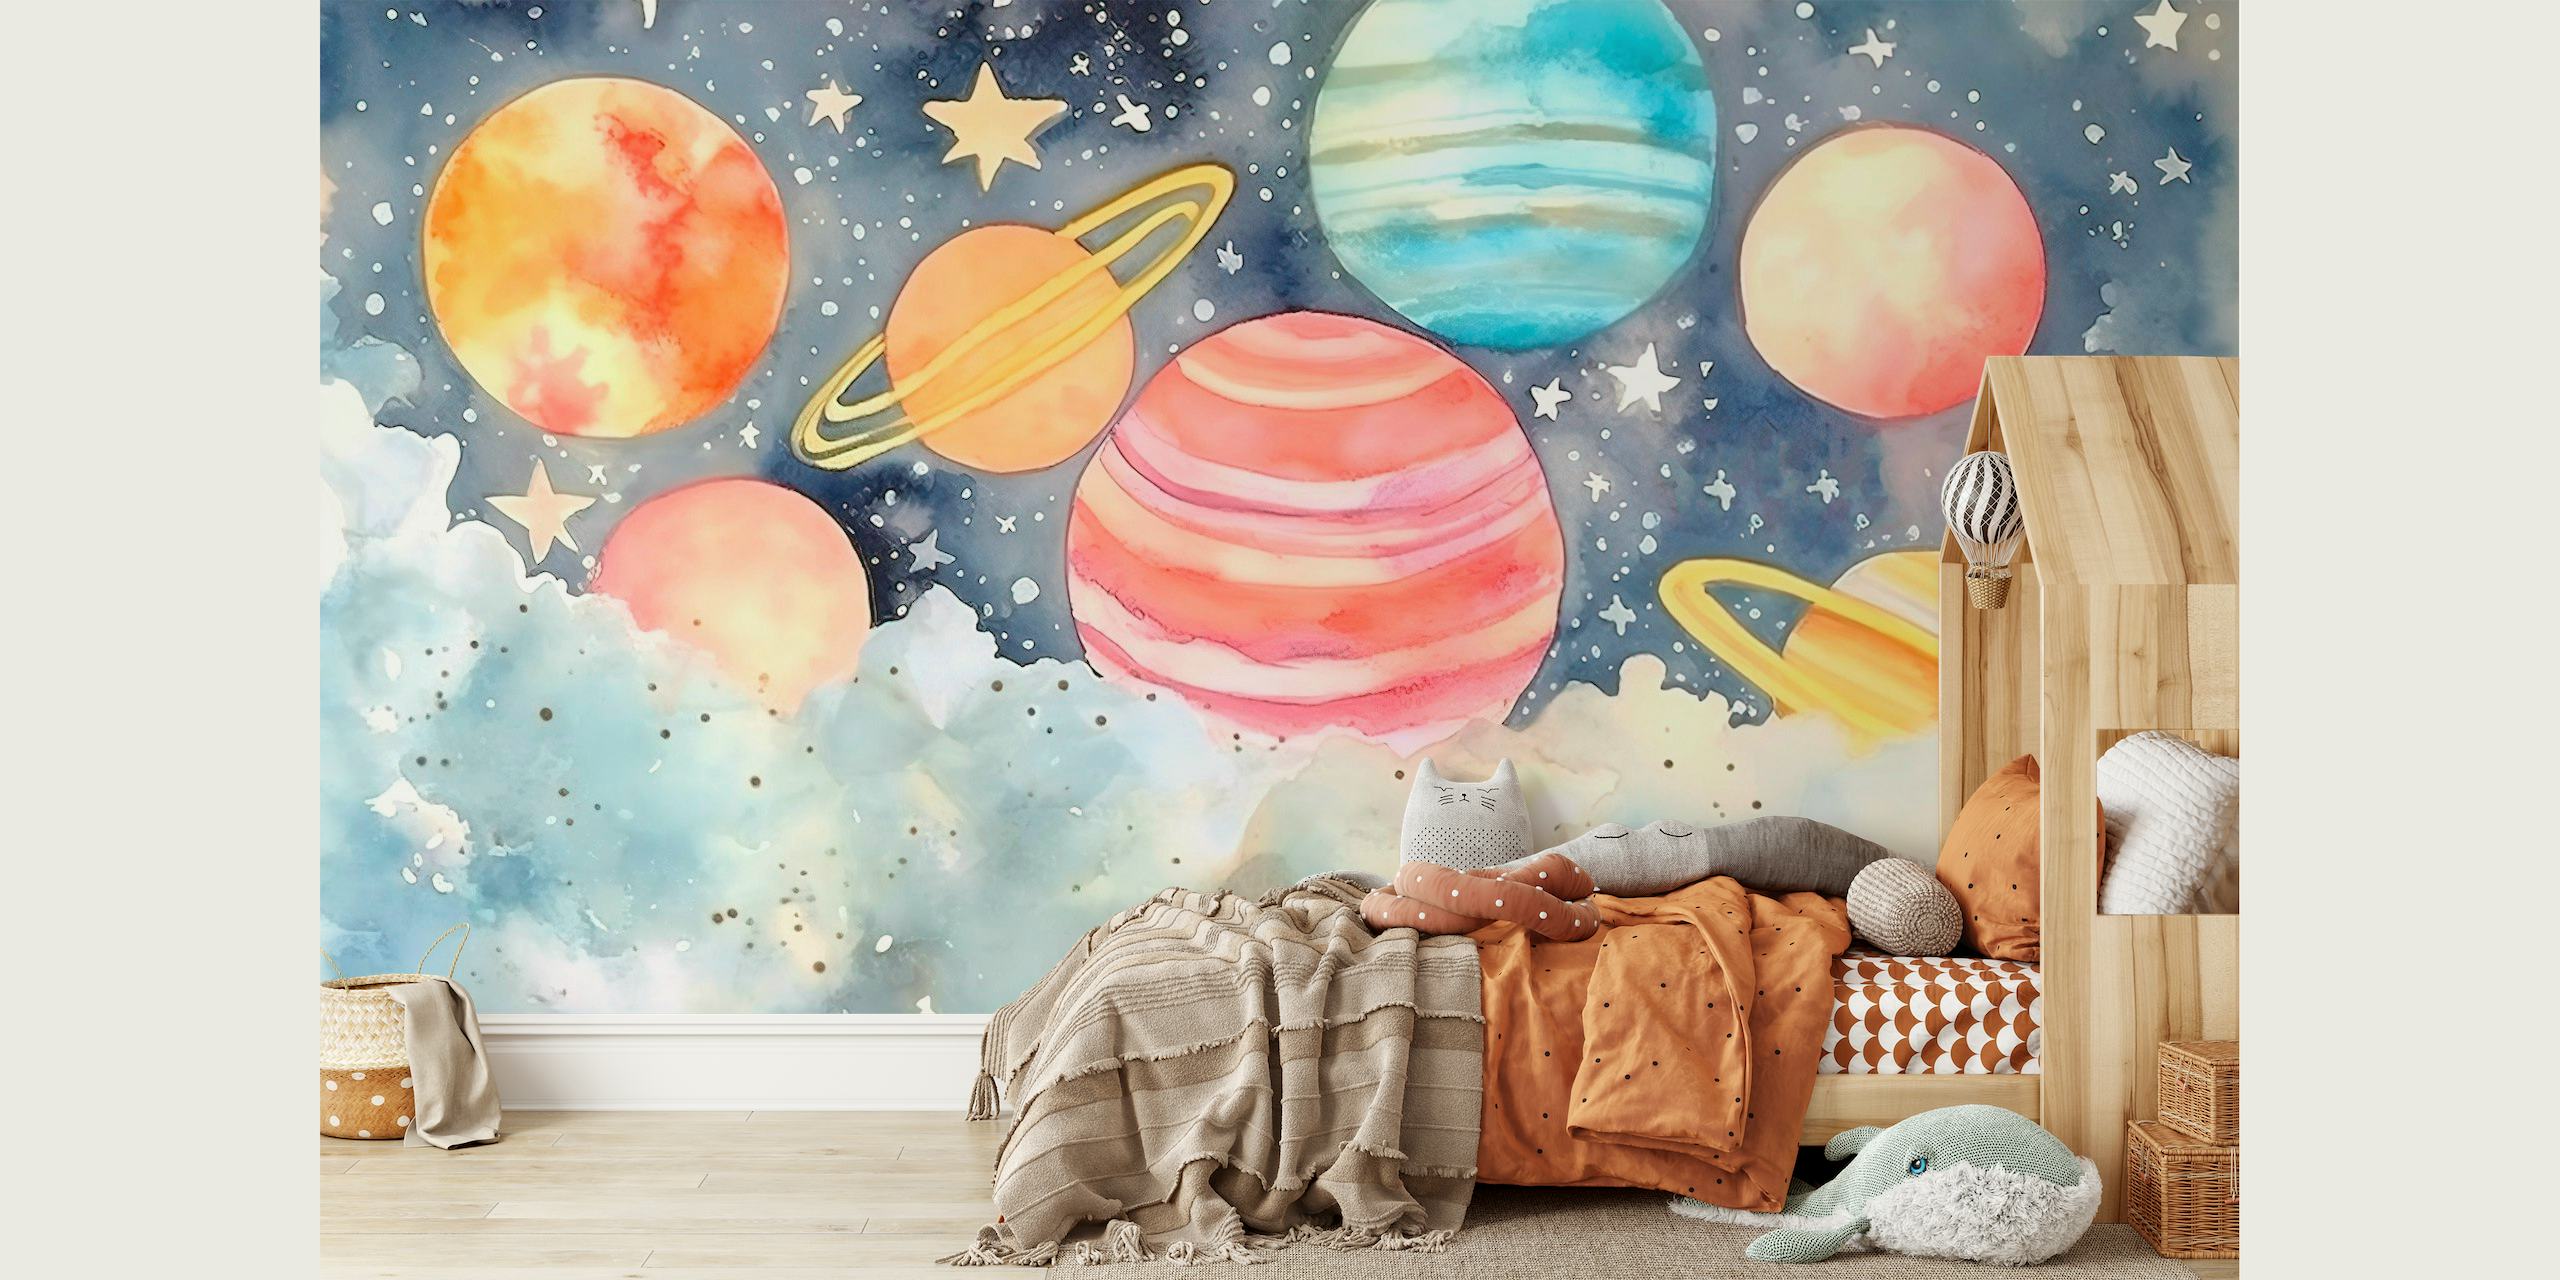 Watercolor Planets behang